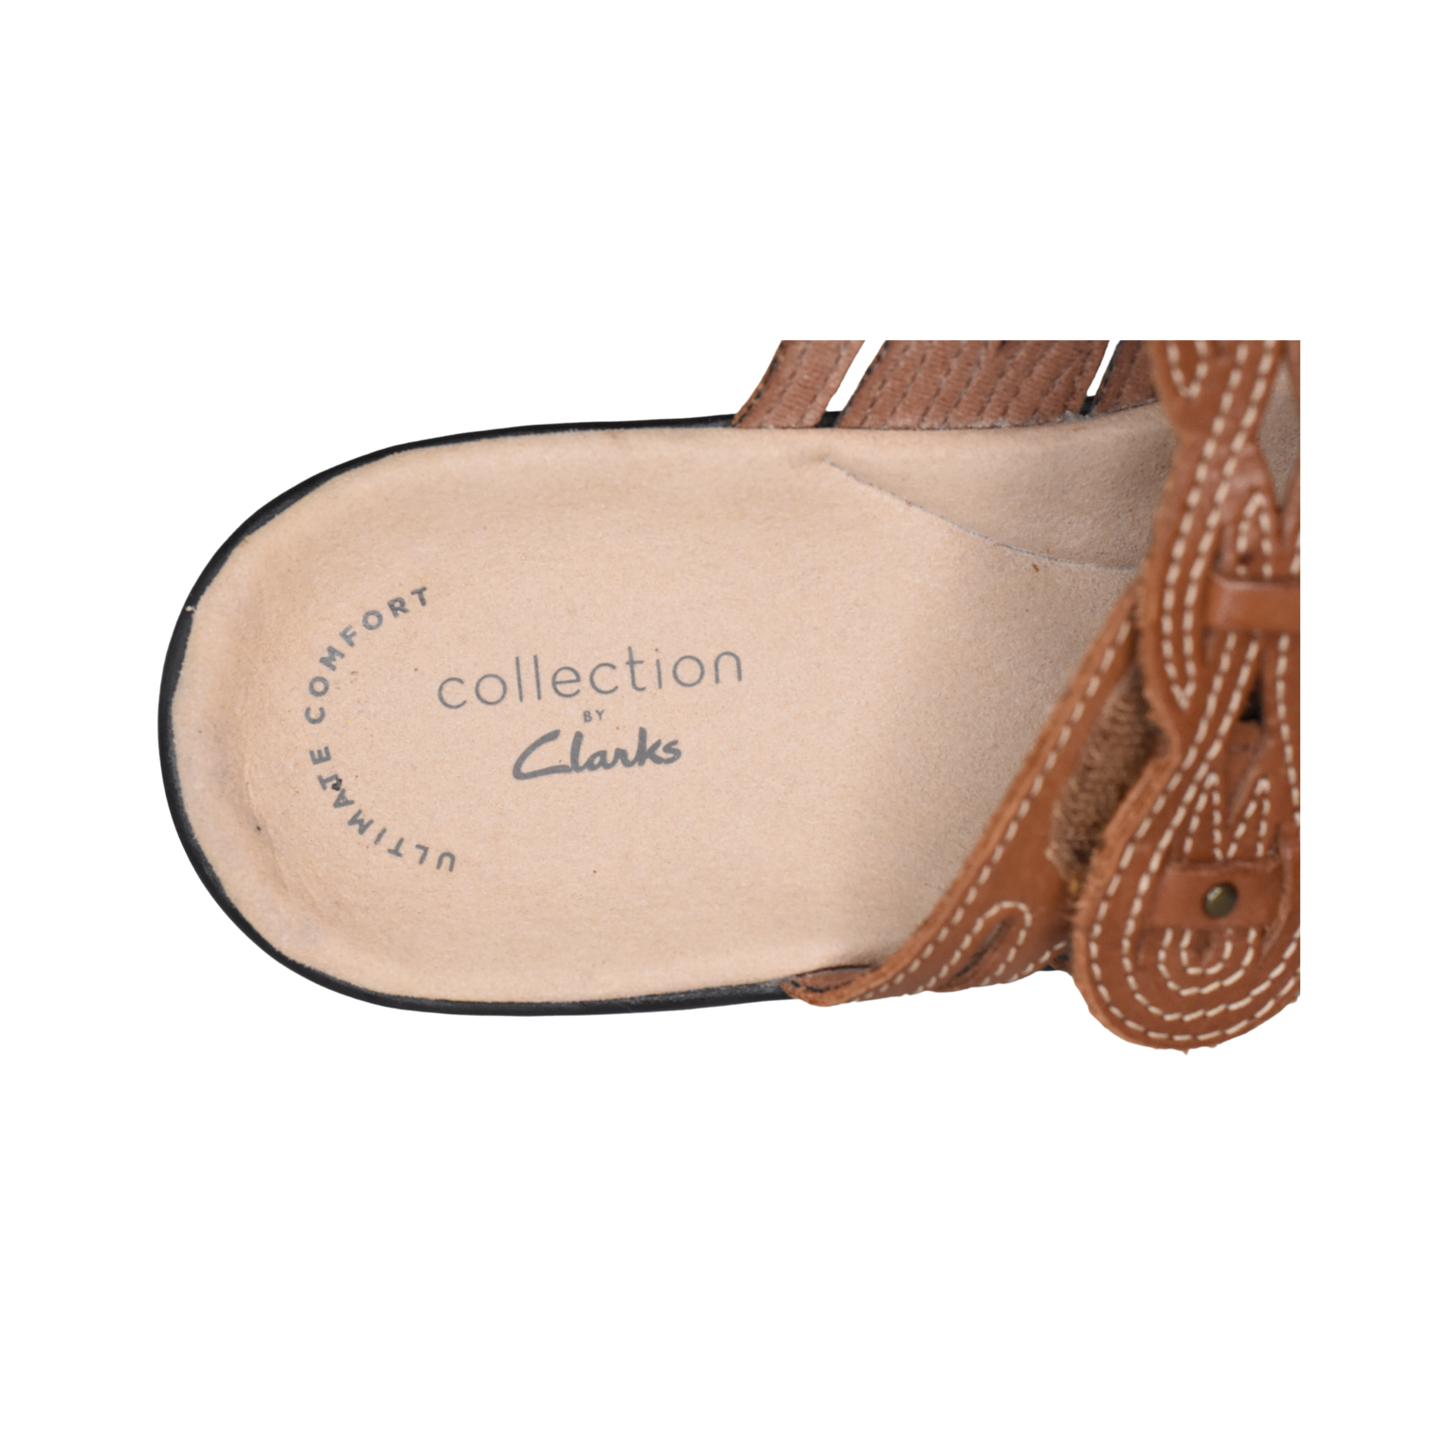 Clarks Sandal w White Stitching Brown Size 7 SKU 000339-3